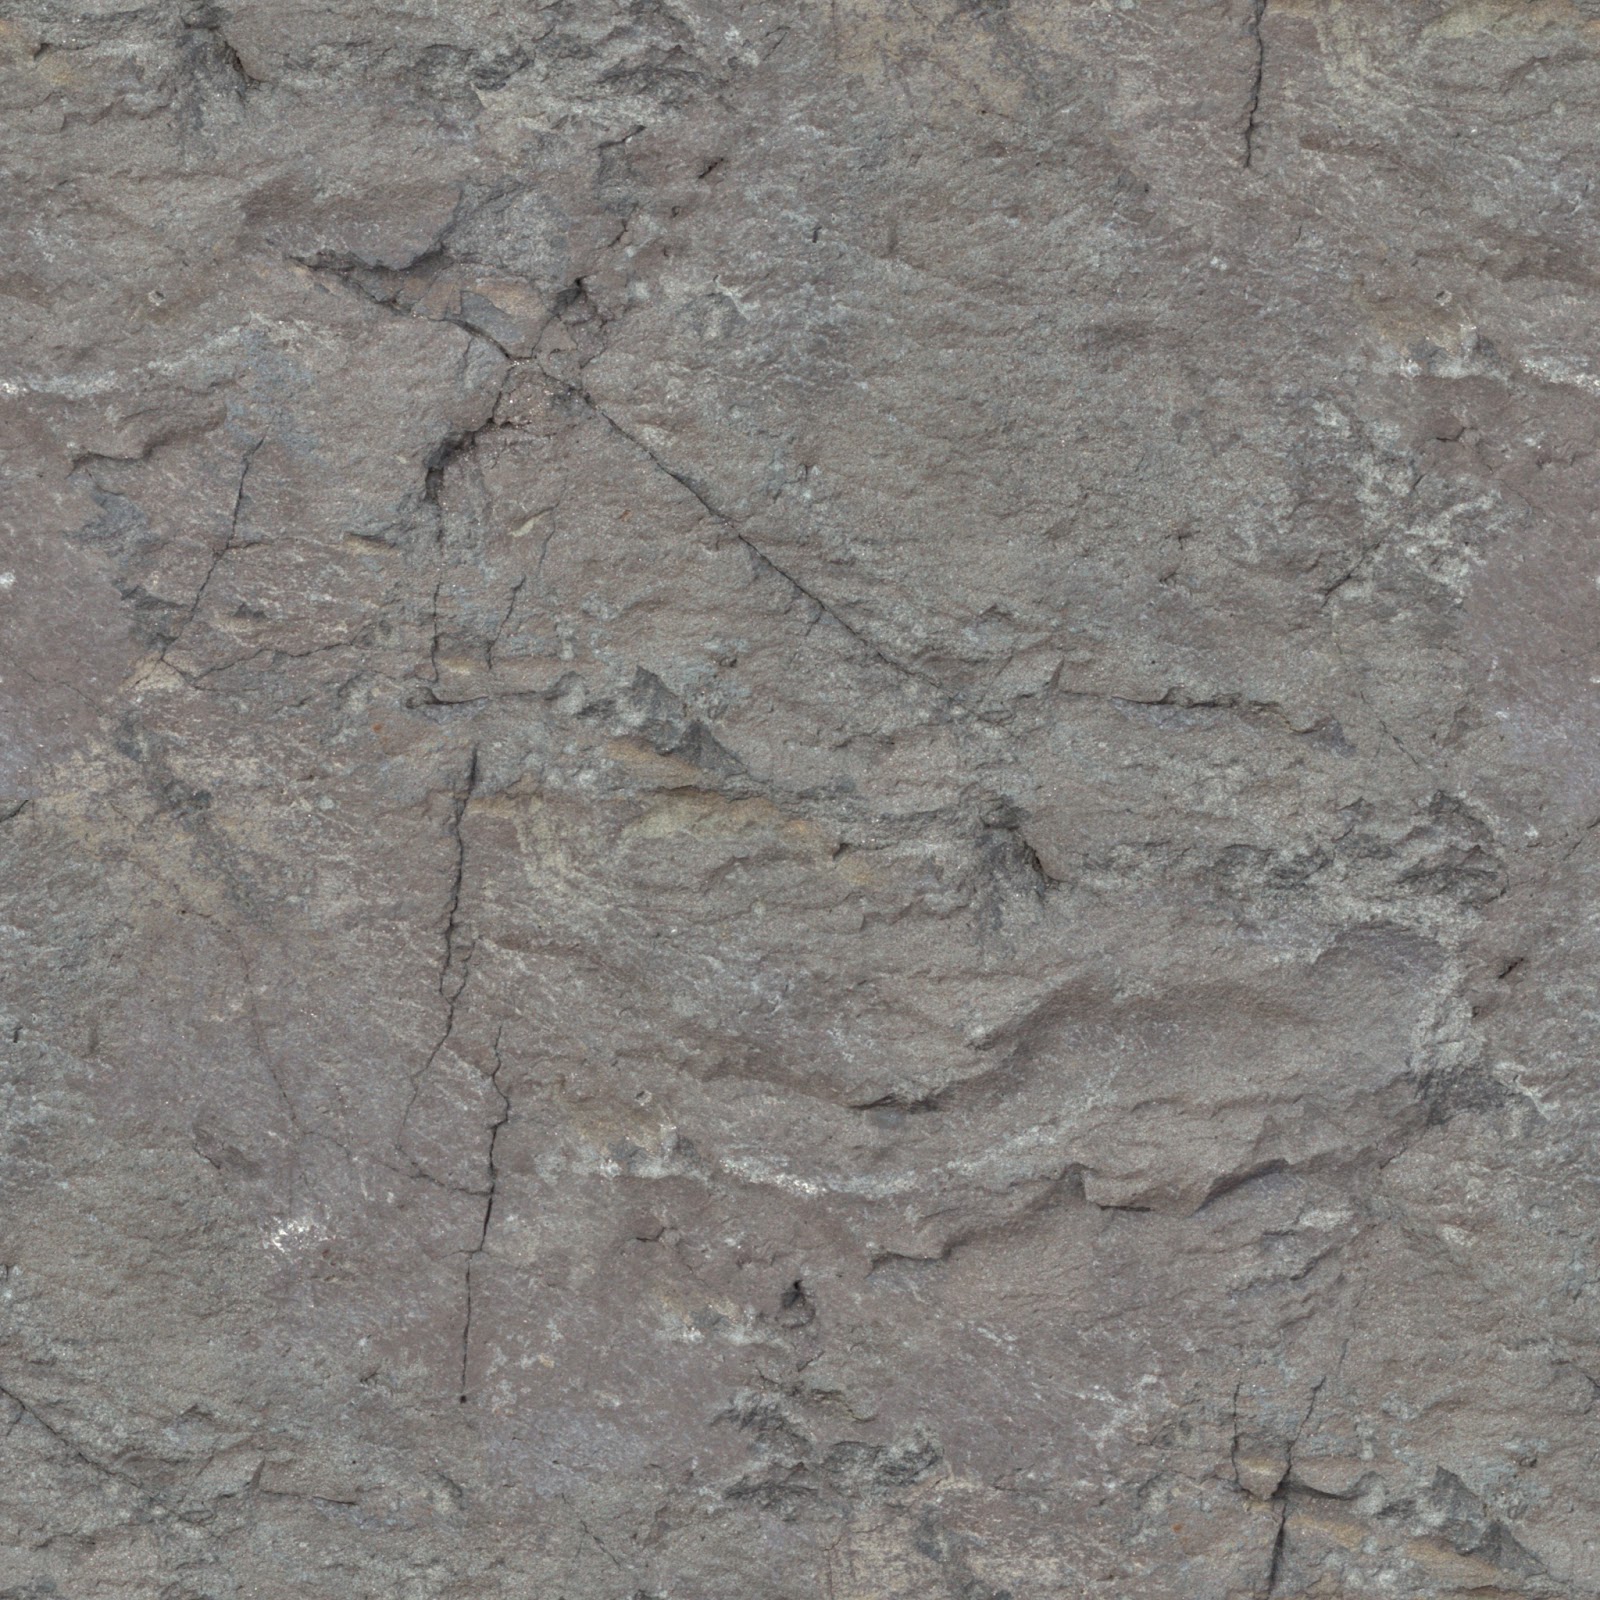 High Resolution Seamless Textures: Rock face surface texture 4770x3178